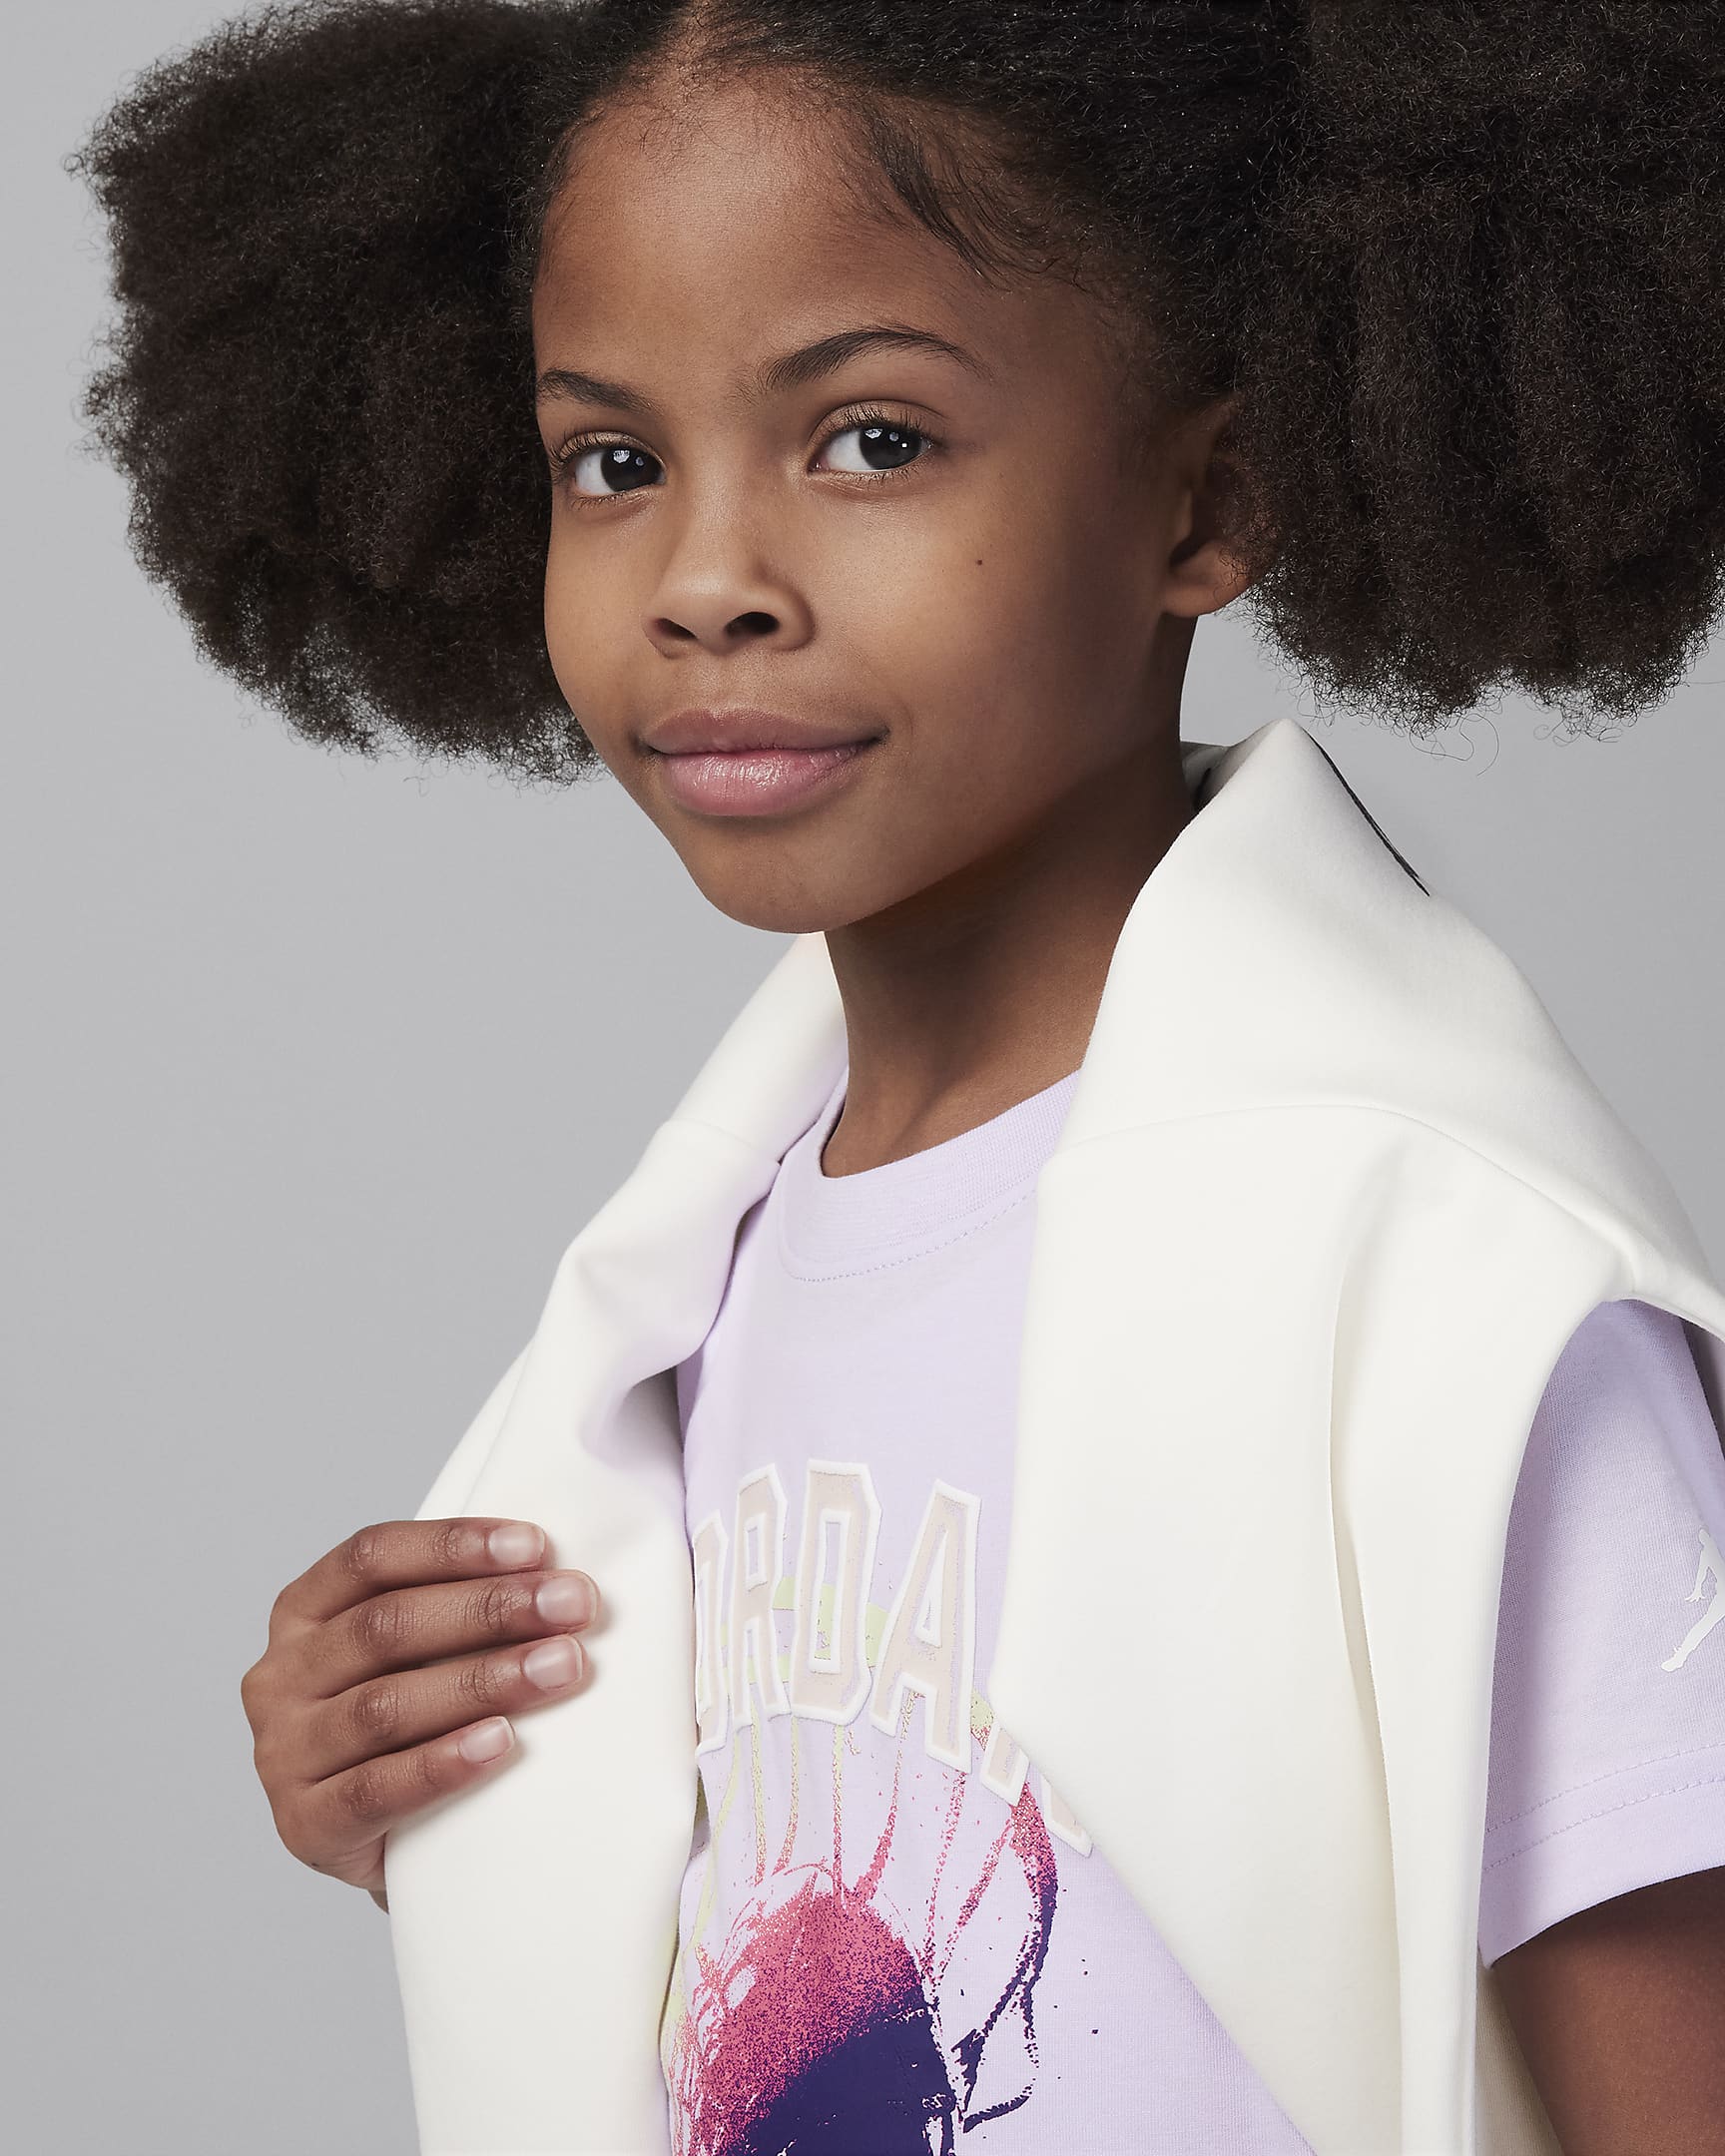 Jordan Hoop Style Little Kids' Graphic T-Shirt. Nike.com